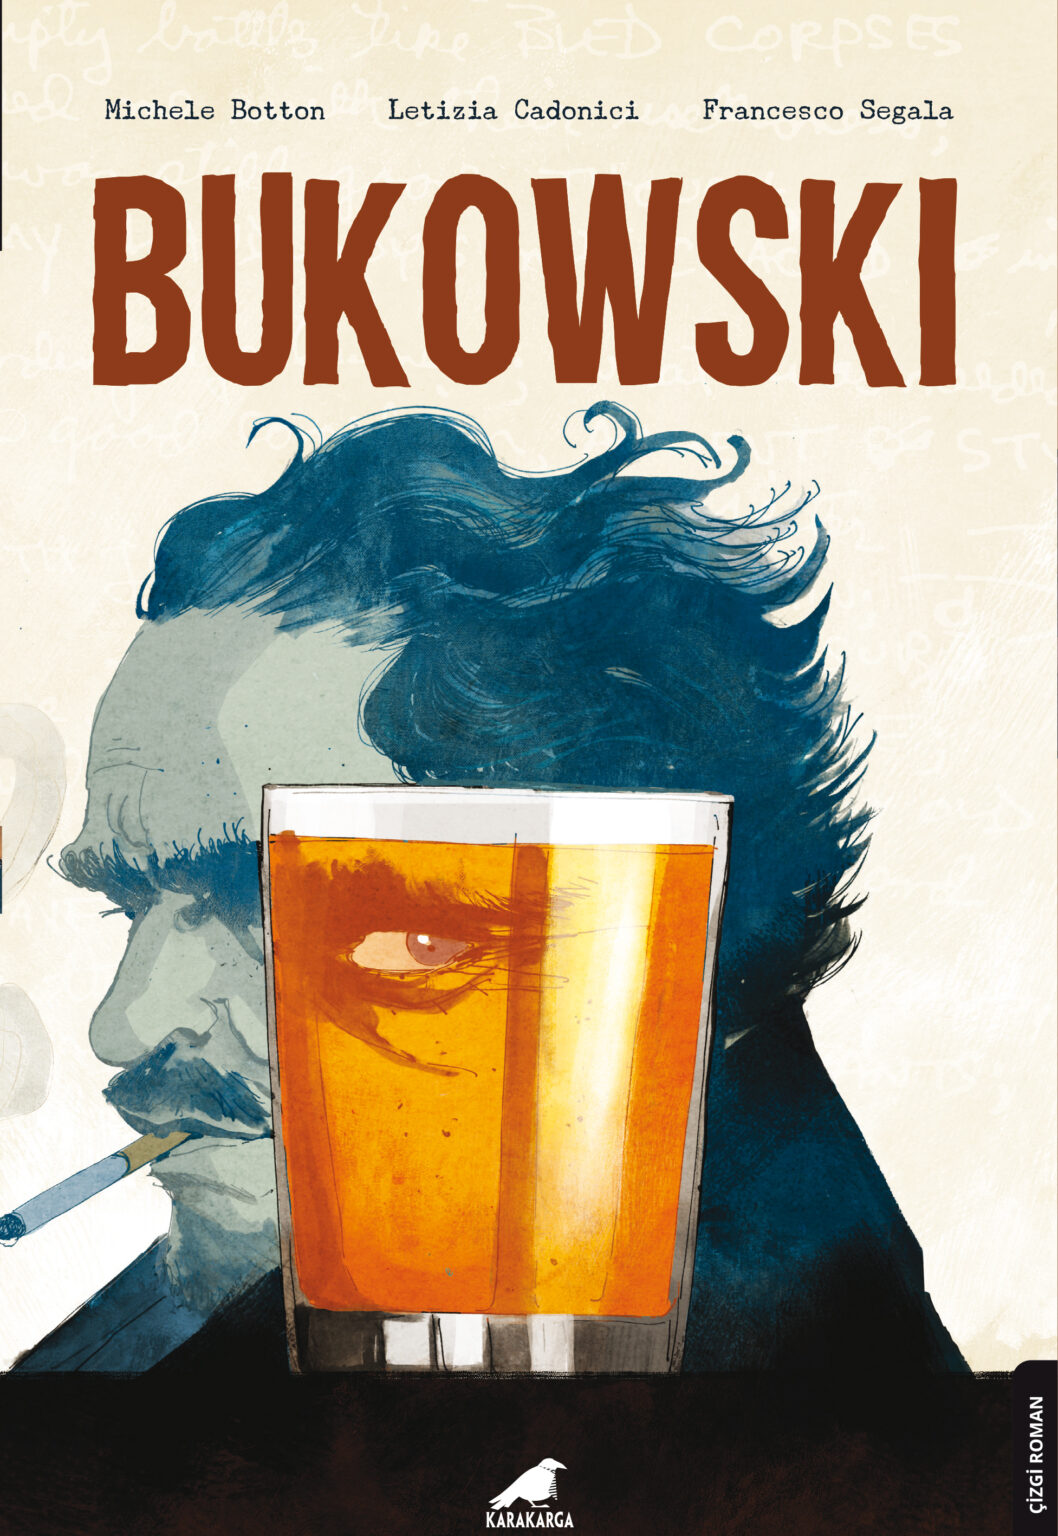 Bukowski - Michele Botton